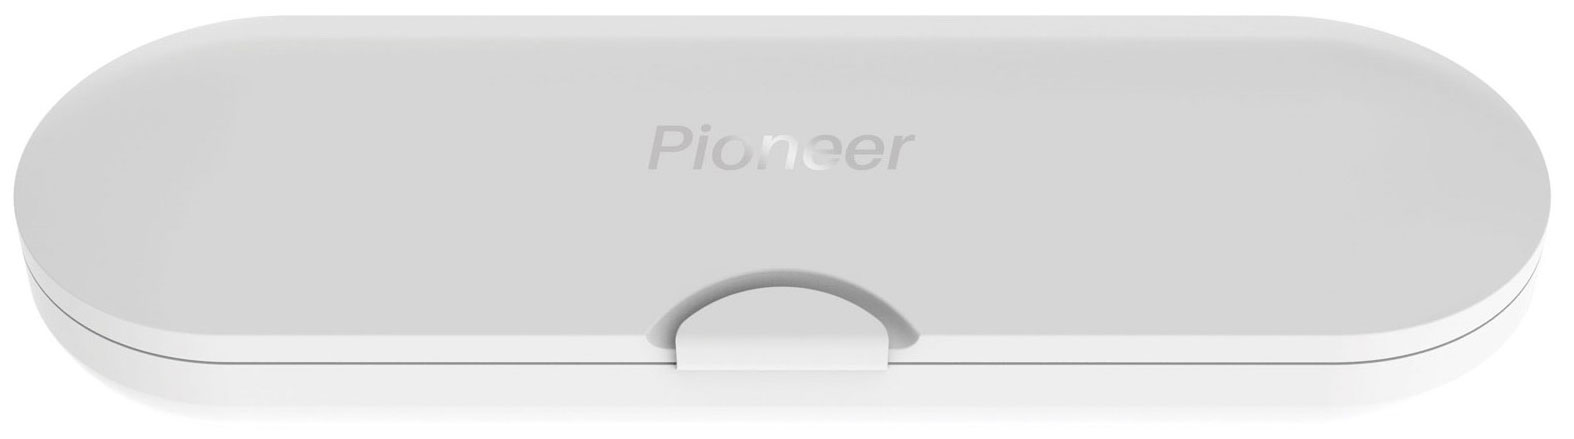 Зубная щетка Pioneer TB-5020 зубная щетка pioneer tb 1012